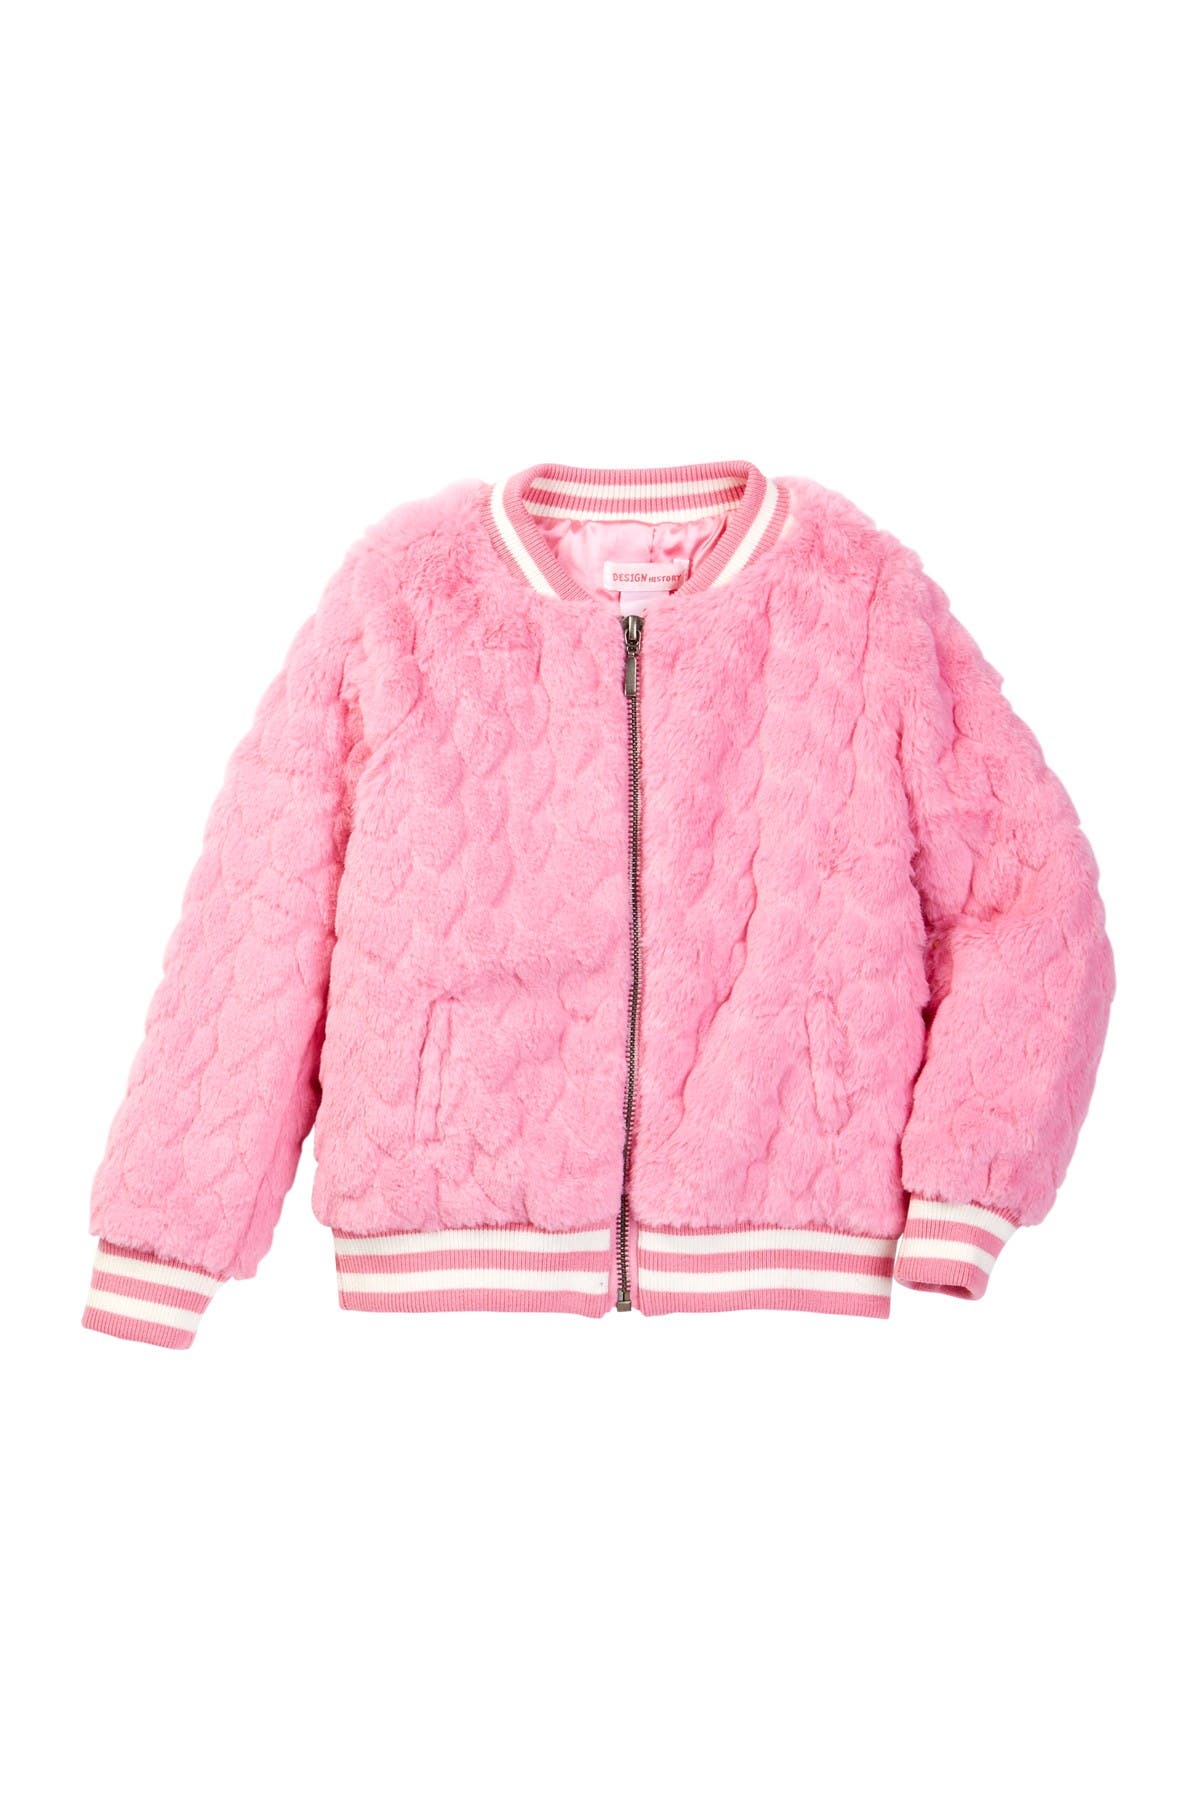 nike pink heart bomber jacket